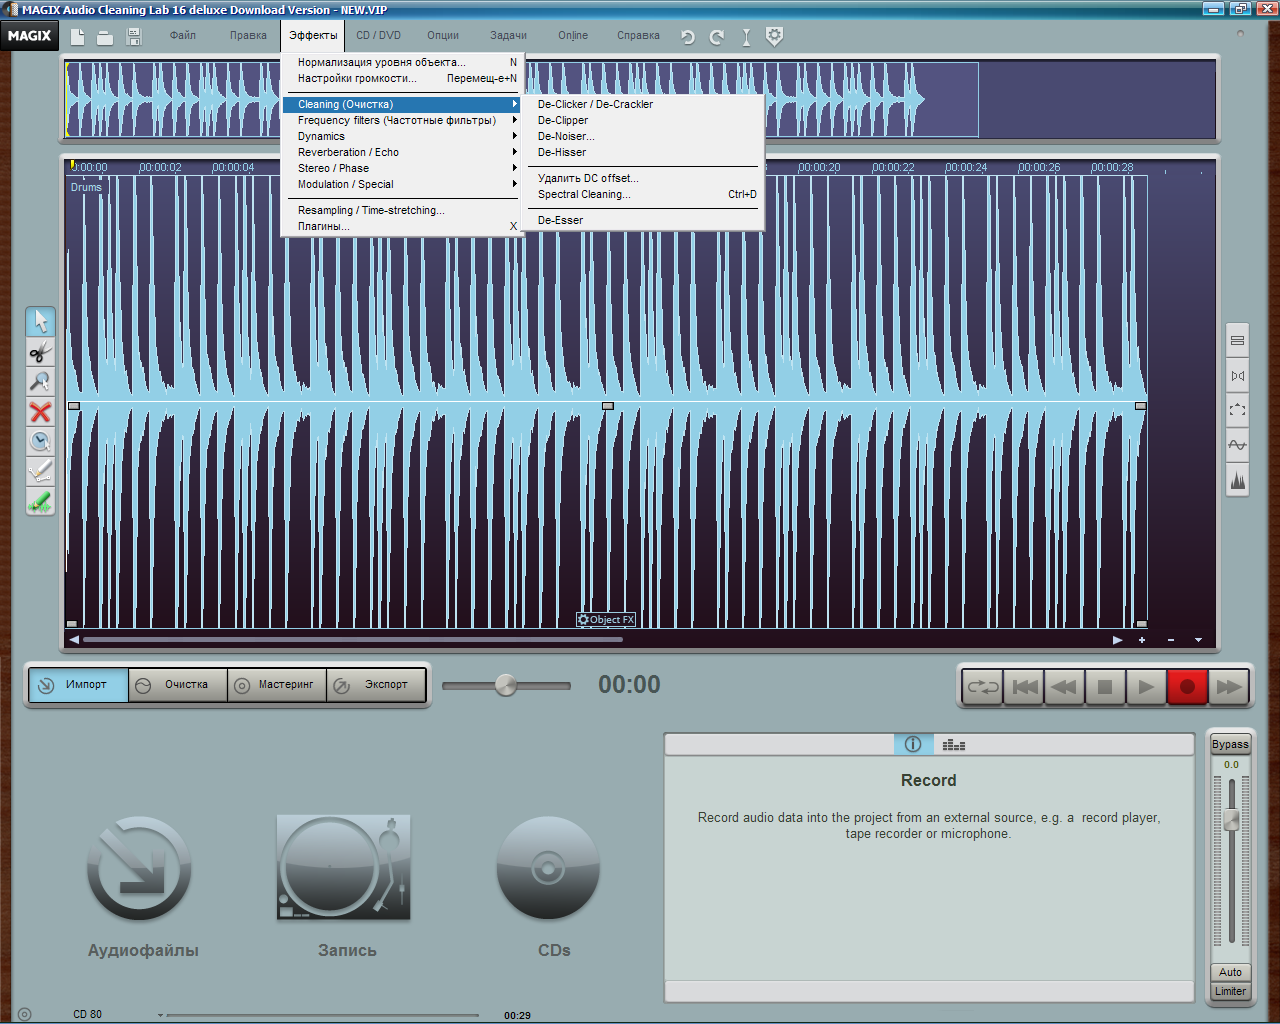 MAGIX Audio Cleaning Lab 16 Deluxe RUS + ключ скачать бесплатно